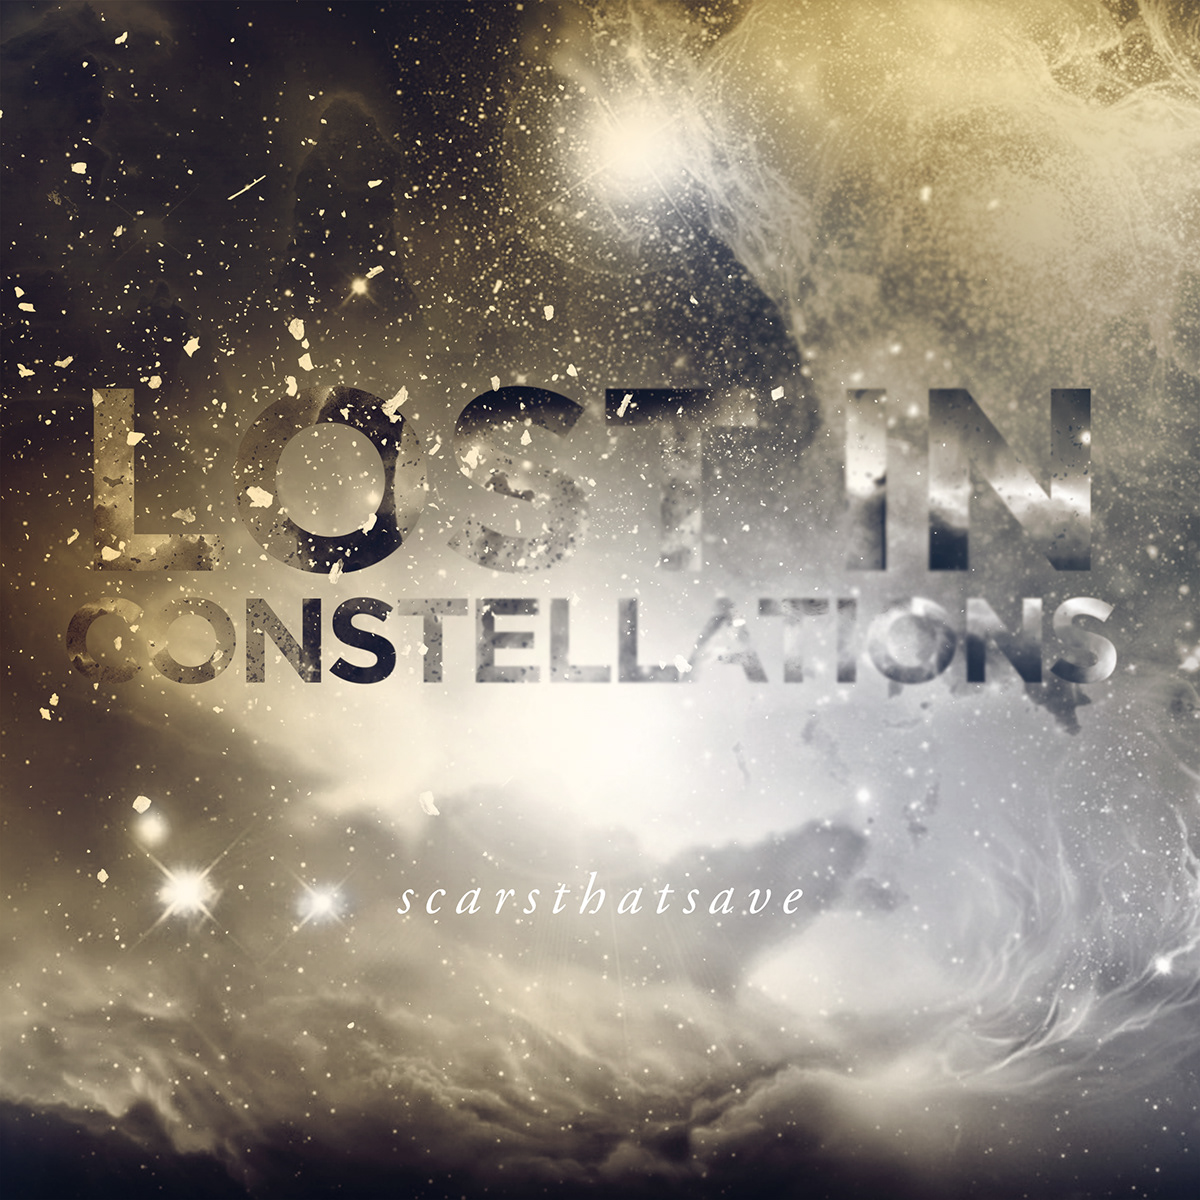 lost IN Constellations Lost in Constellations scarsthatsave Royal North The Sedative brandon wiebe Swift Current Saskatchewan Album cover art artwork